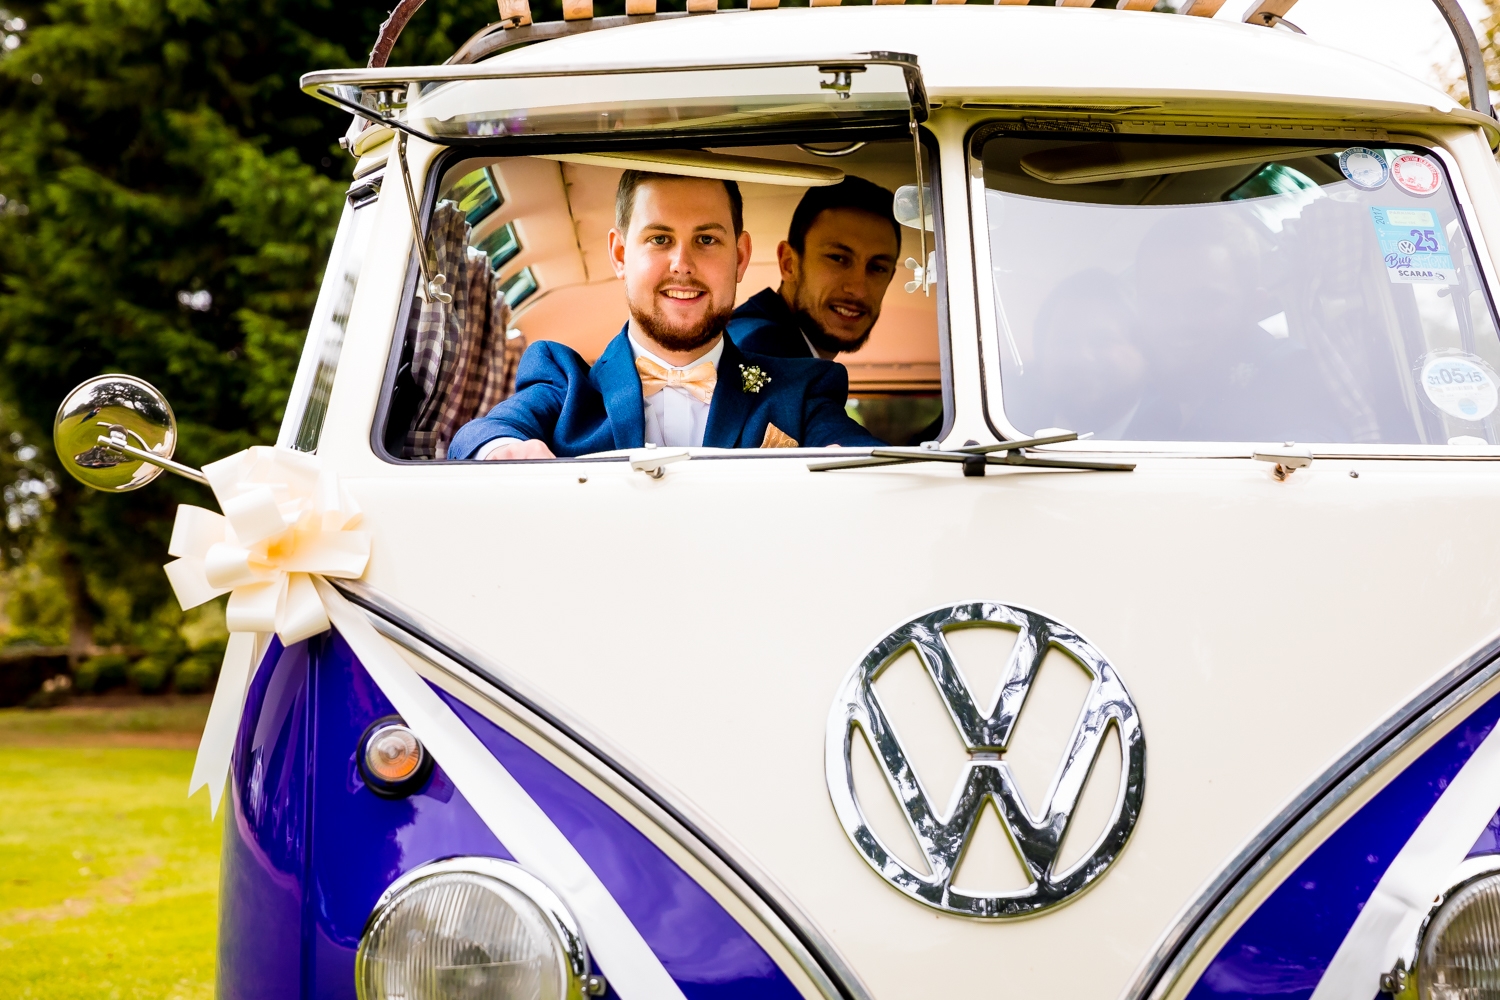 Elliot driving the VW campervan wedding car